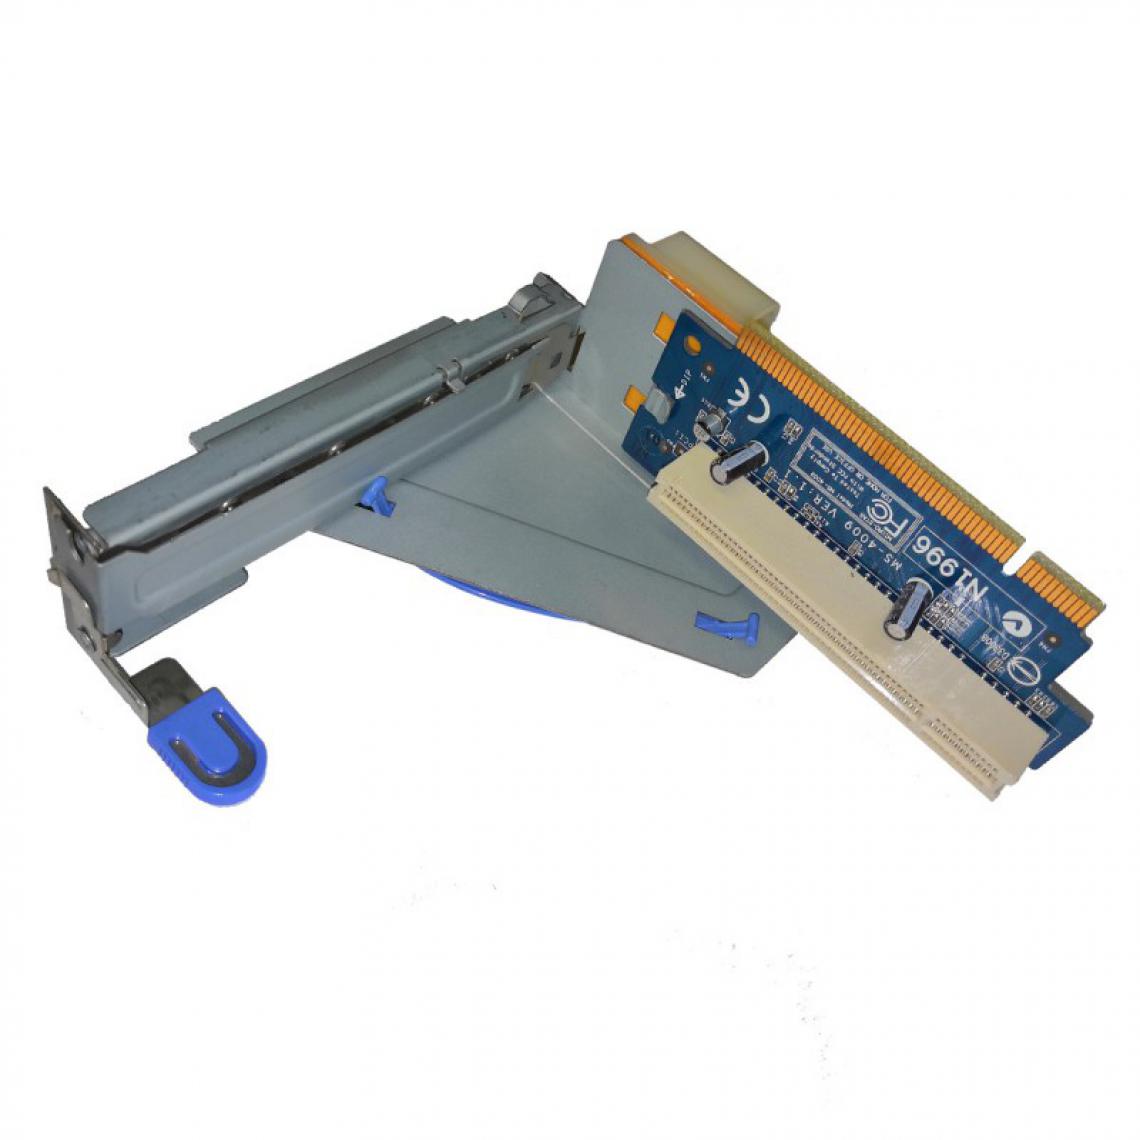 Lenovo - Carte Riser PCI Lenovo A55 SFF MS-4009 C788B1801 C788B1901 Pleine Hauteur - Carte Contrôleur USB